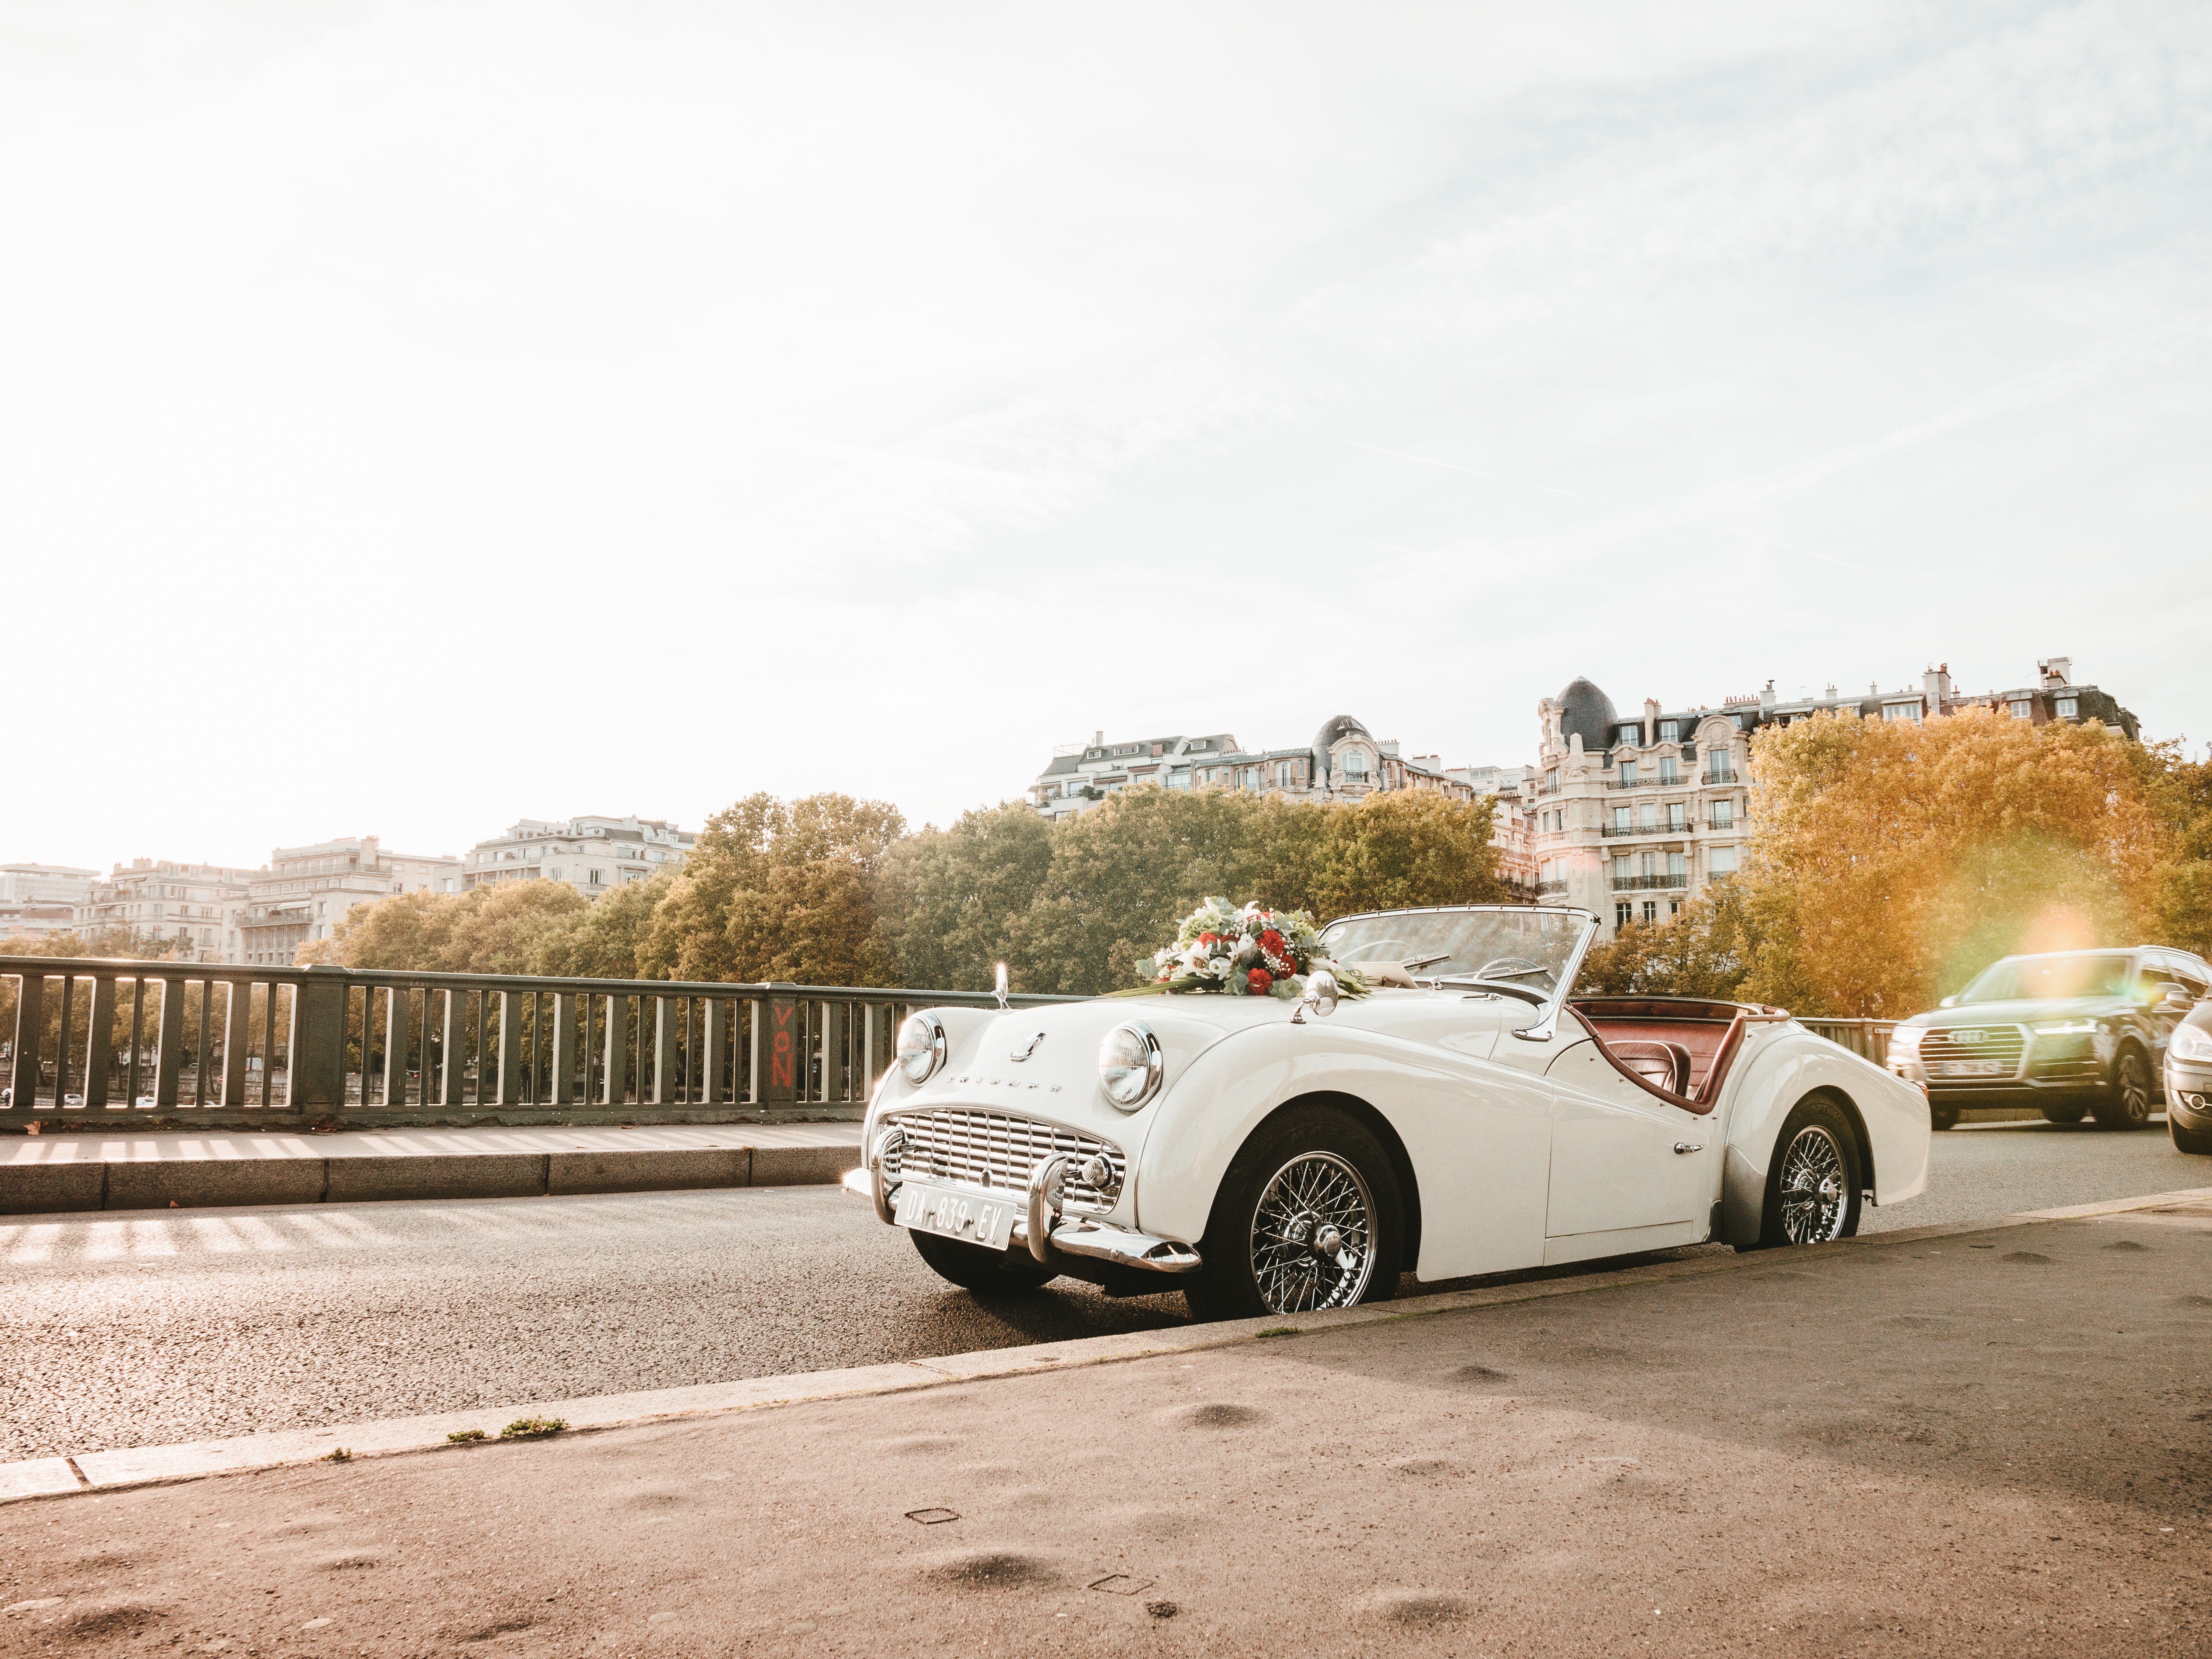 White vintage car | Source: Unsplash